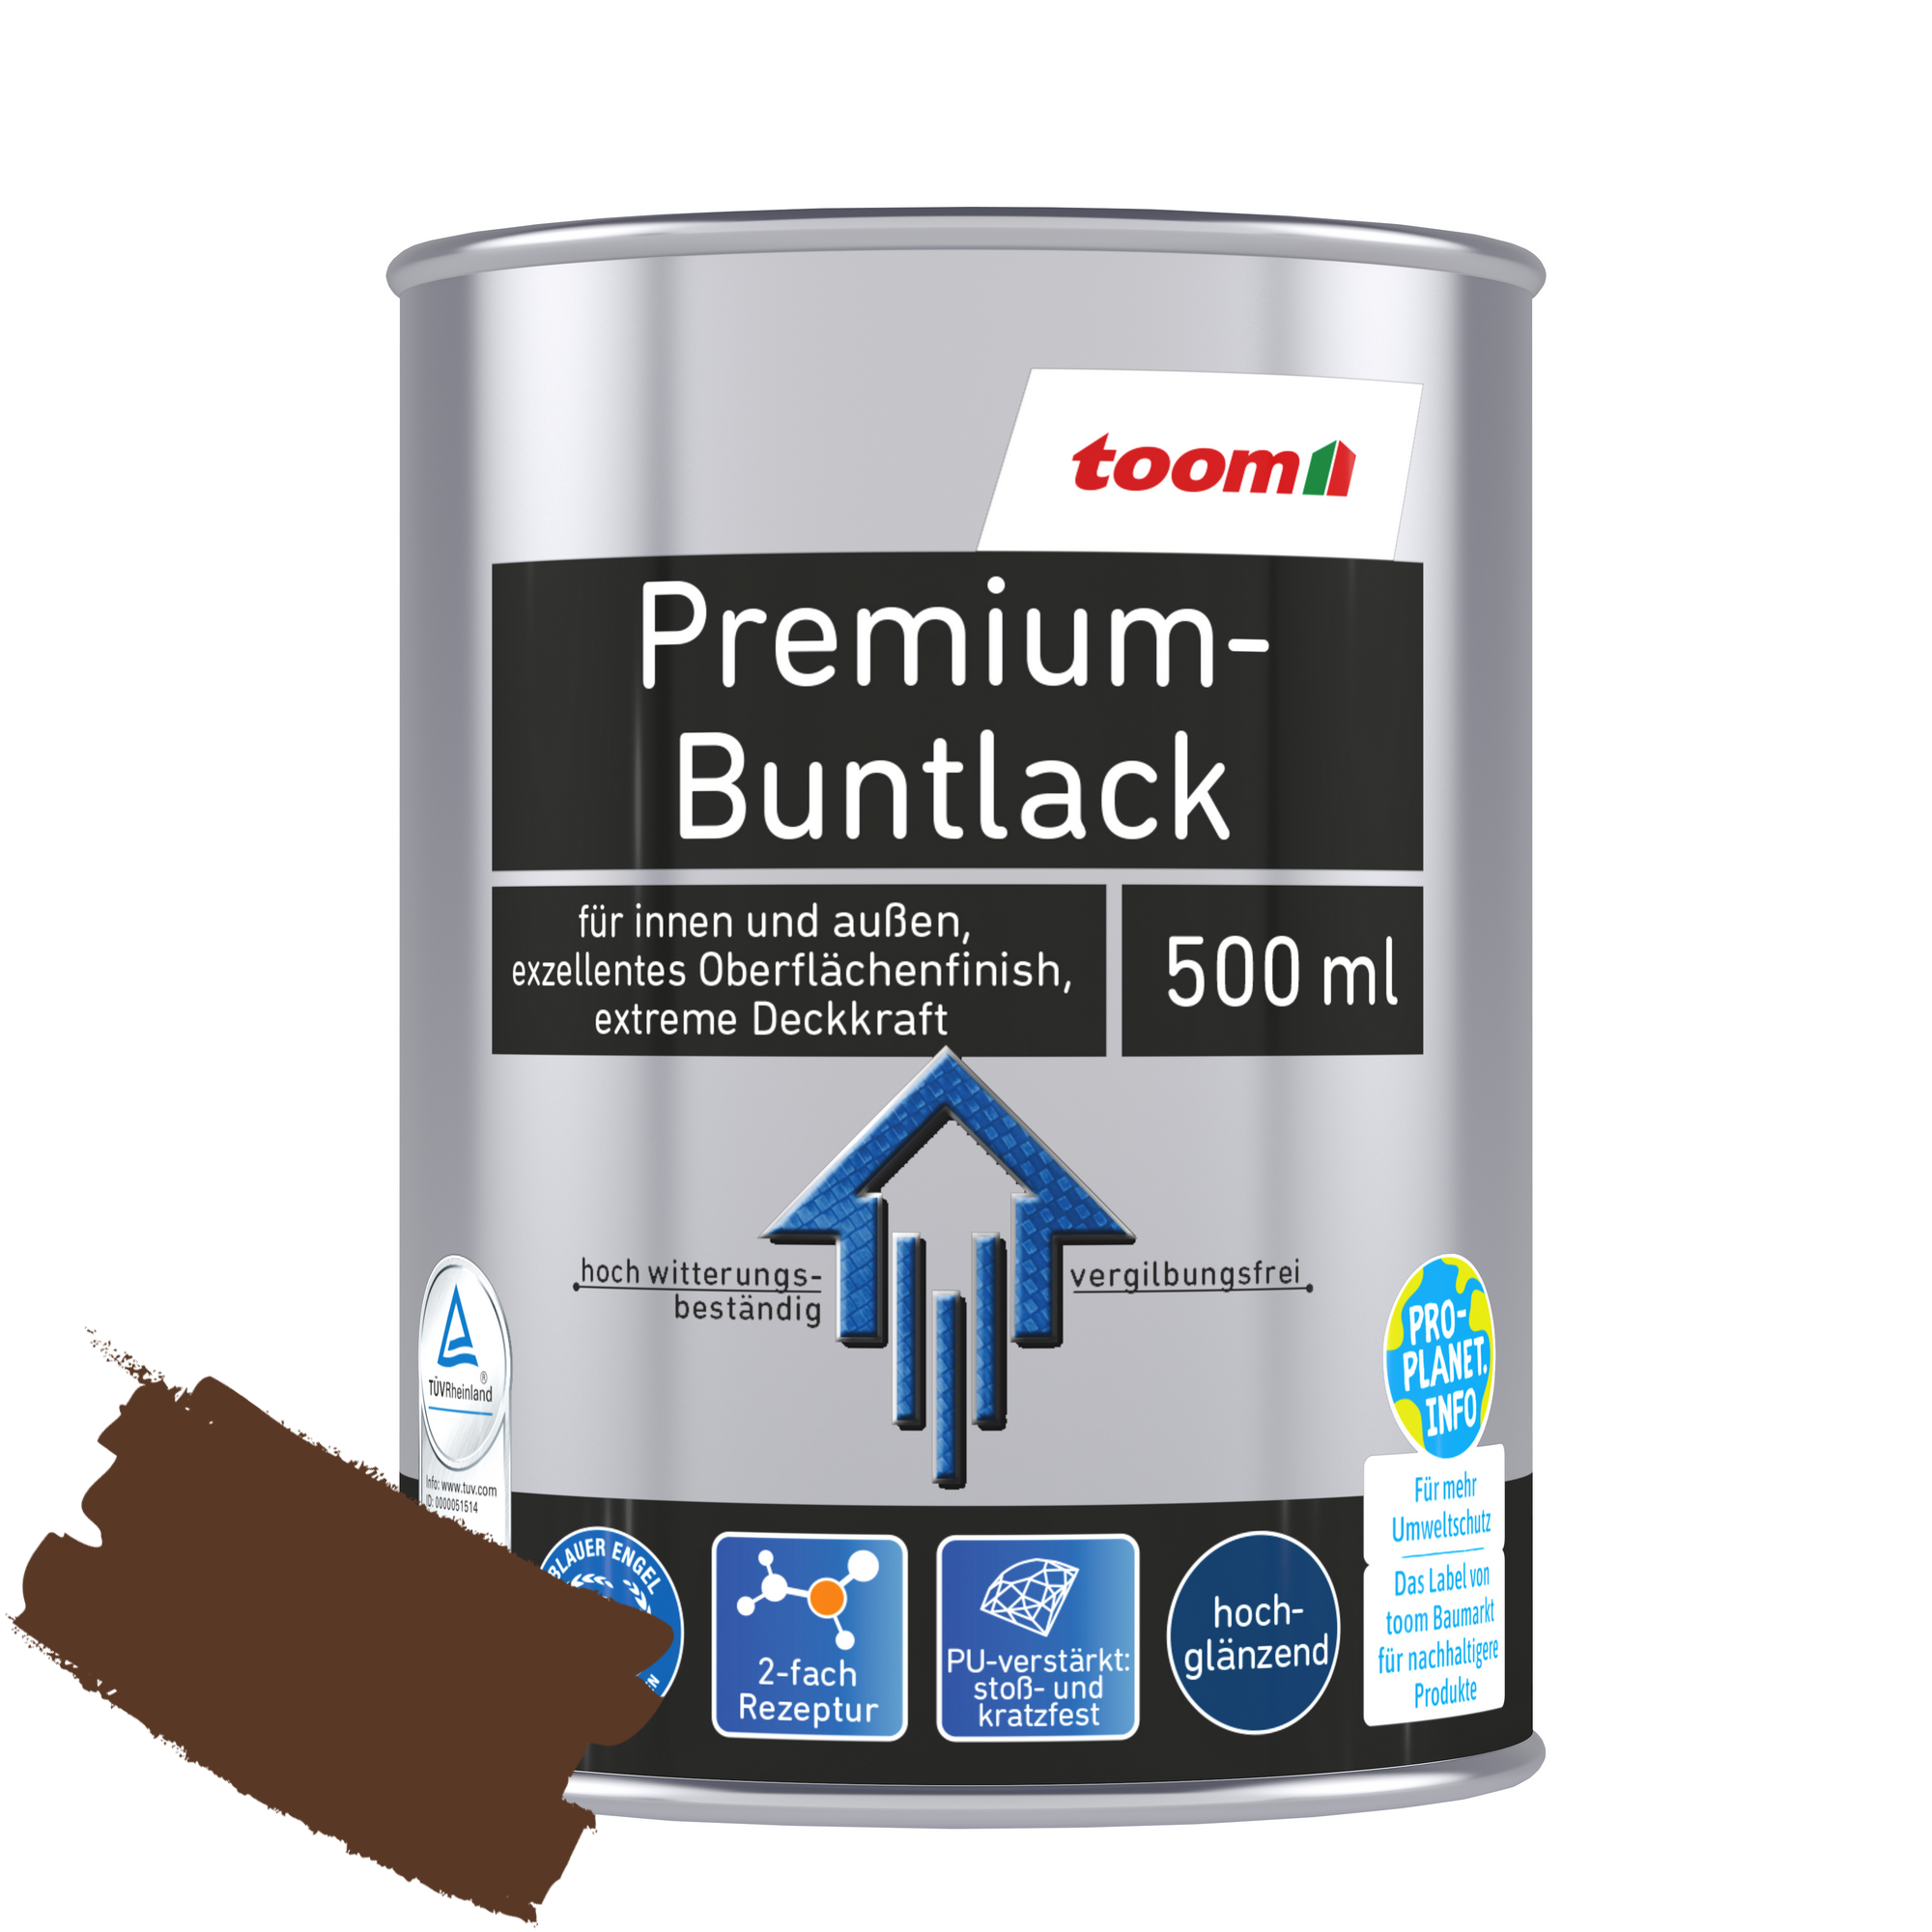 Premium-Buntlack nussbraun glänzend 500 ml + product picture